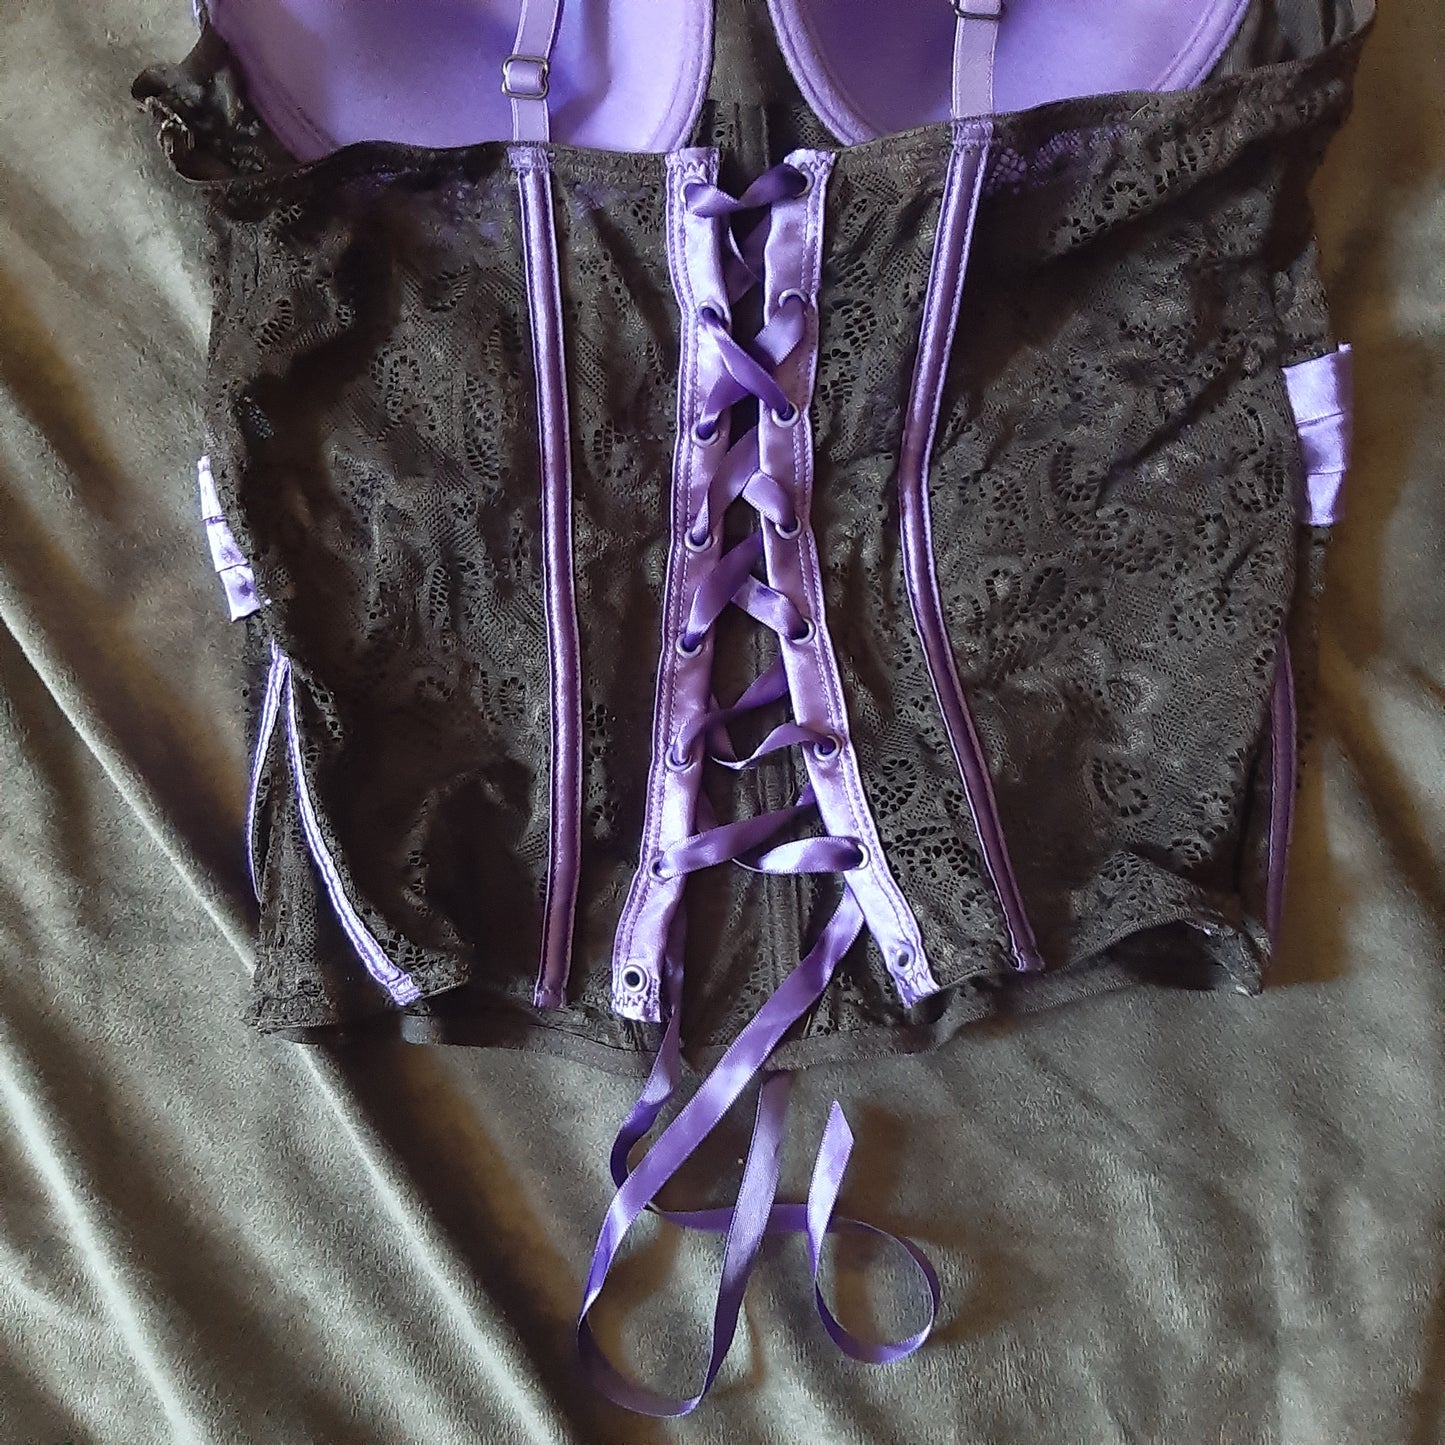 Purple and black lace corset